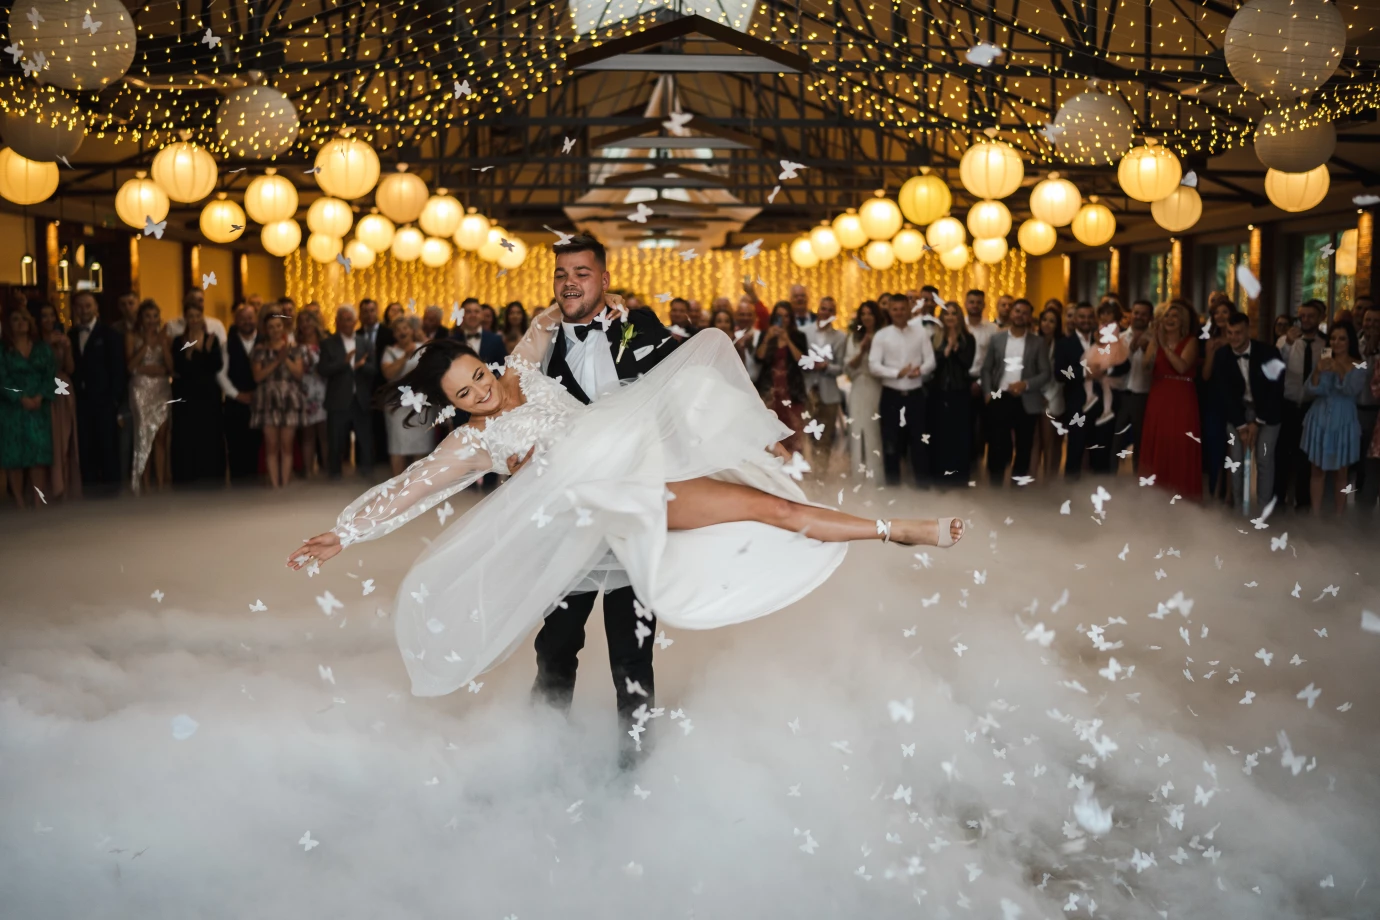 fotograf kielce la-la-love portfolio zdjecia slubne inspiracje wesele plener slubny sesja slubna